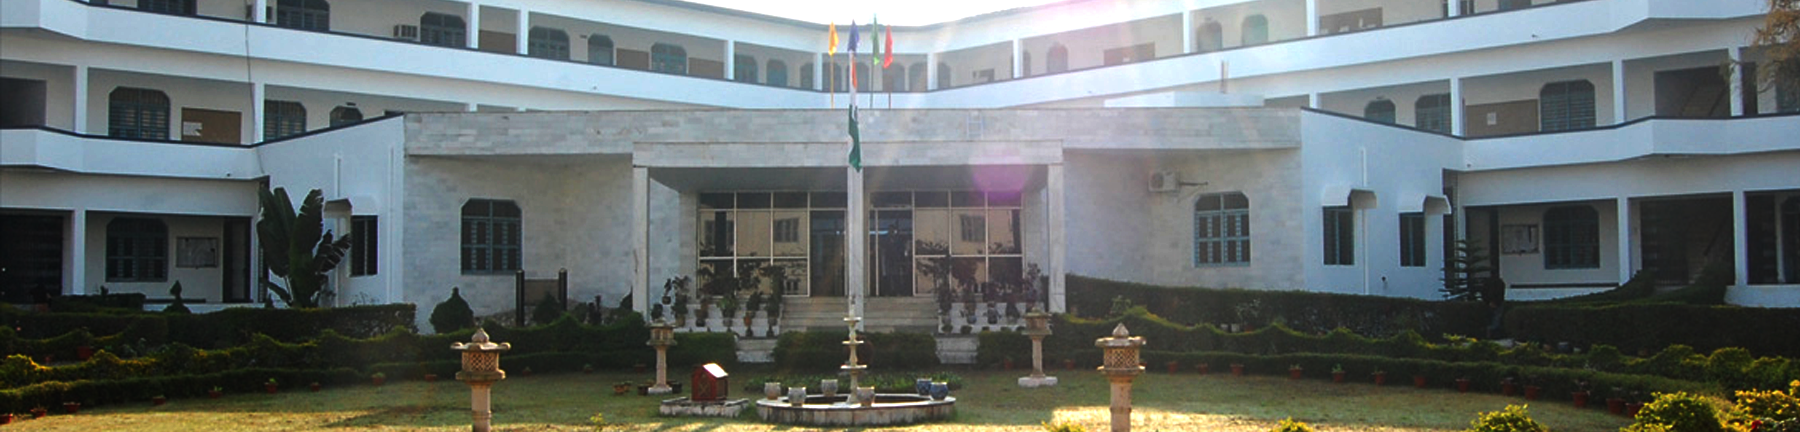 Amrapali Institute of Technology and Sciences, Haldwani